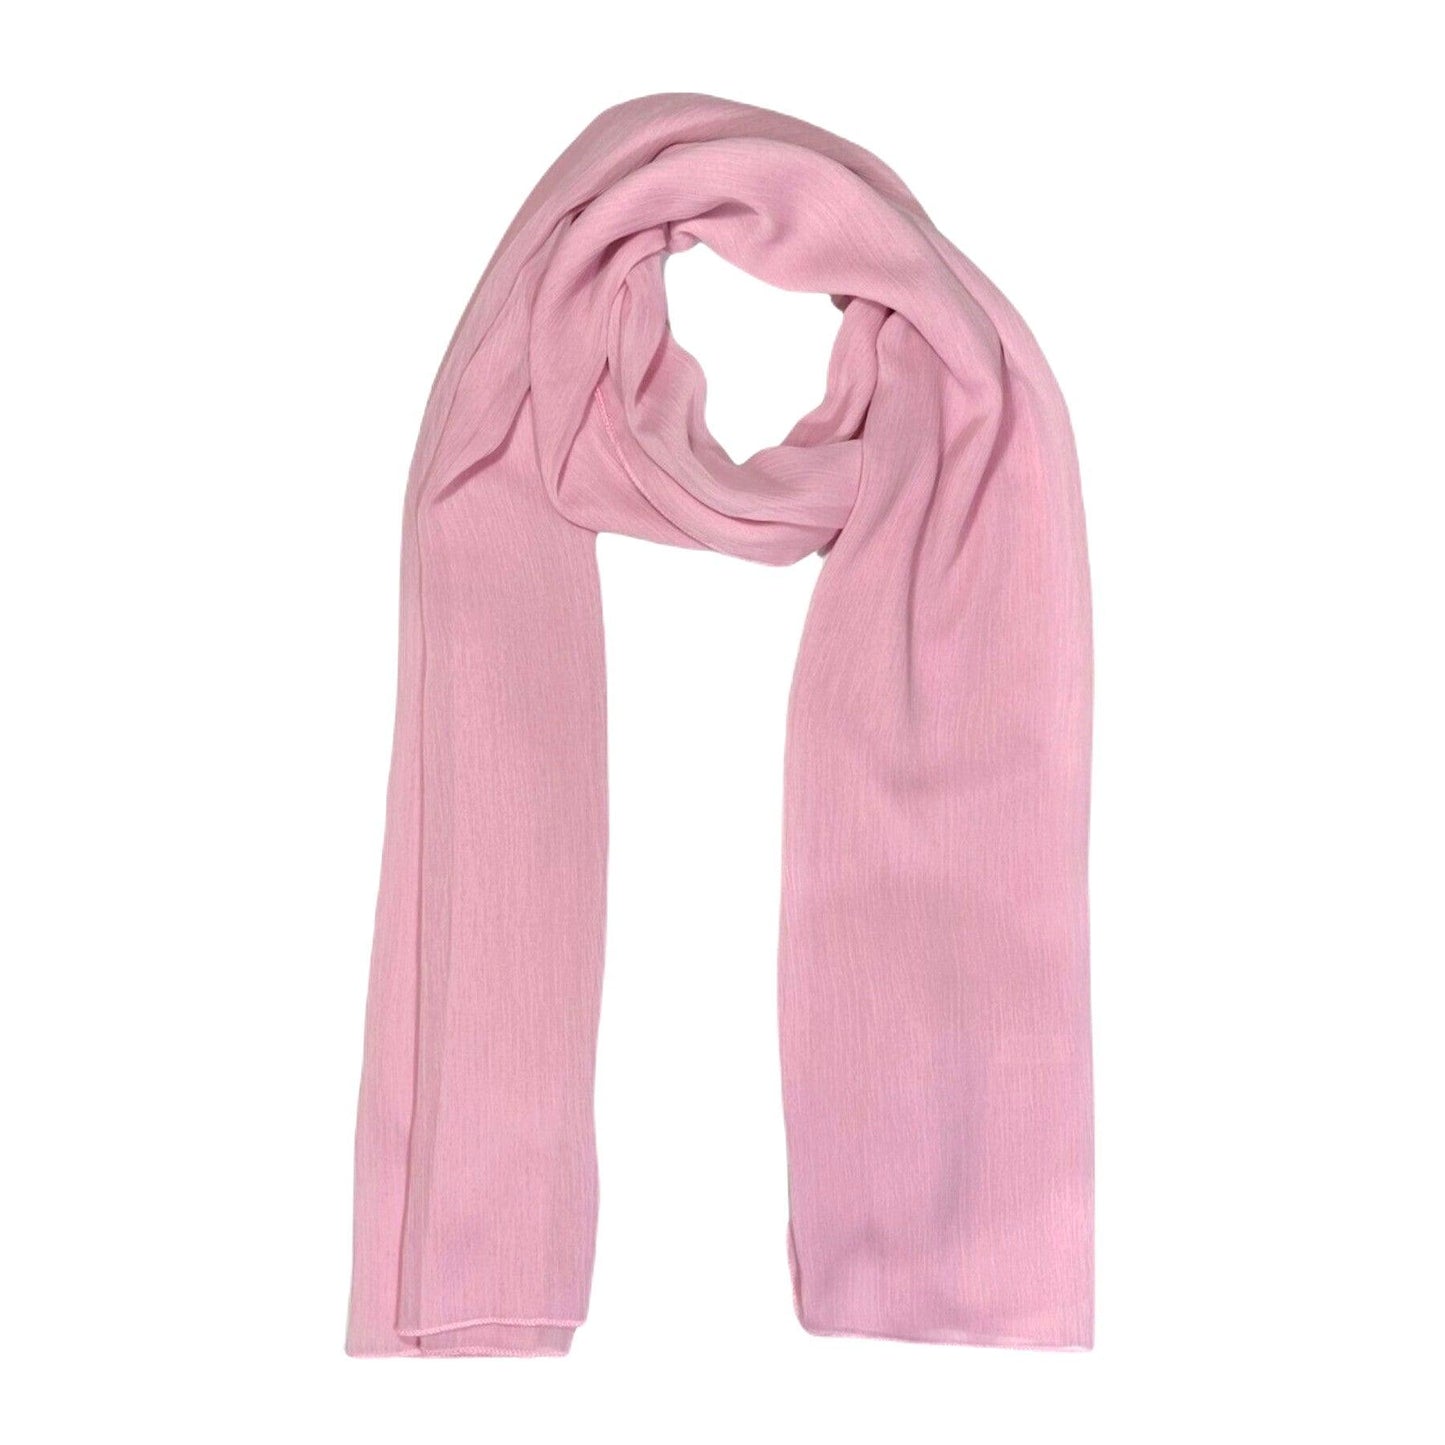 Crepe chiffon scarf 180 x 70 cm by WESTEND CHOICE Scarves & Shawls all scarves, chiffon scarves, crepe chiffon scarves, women